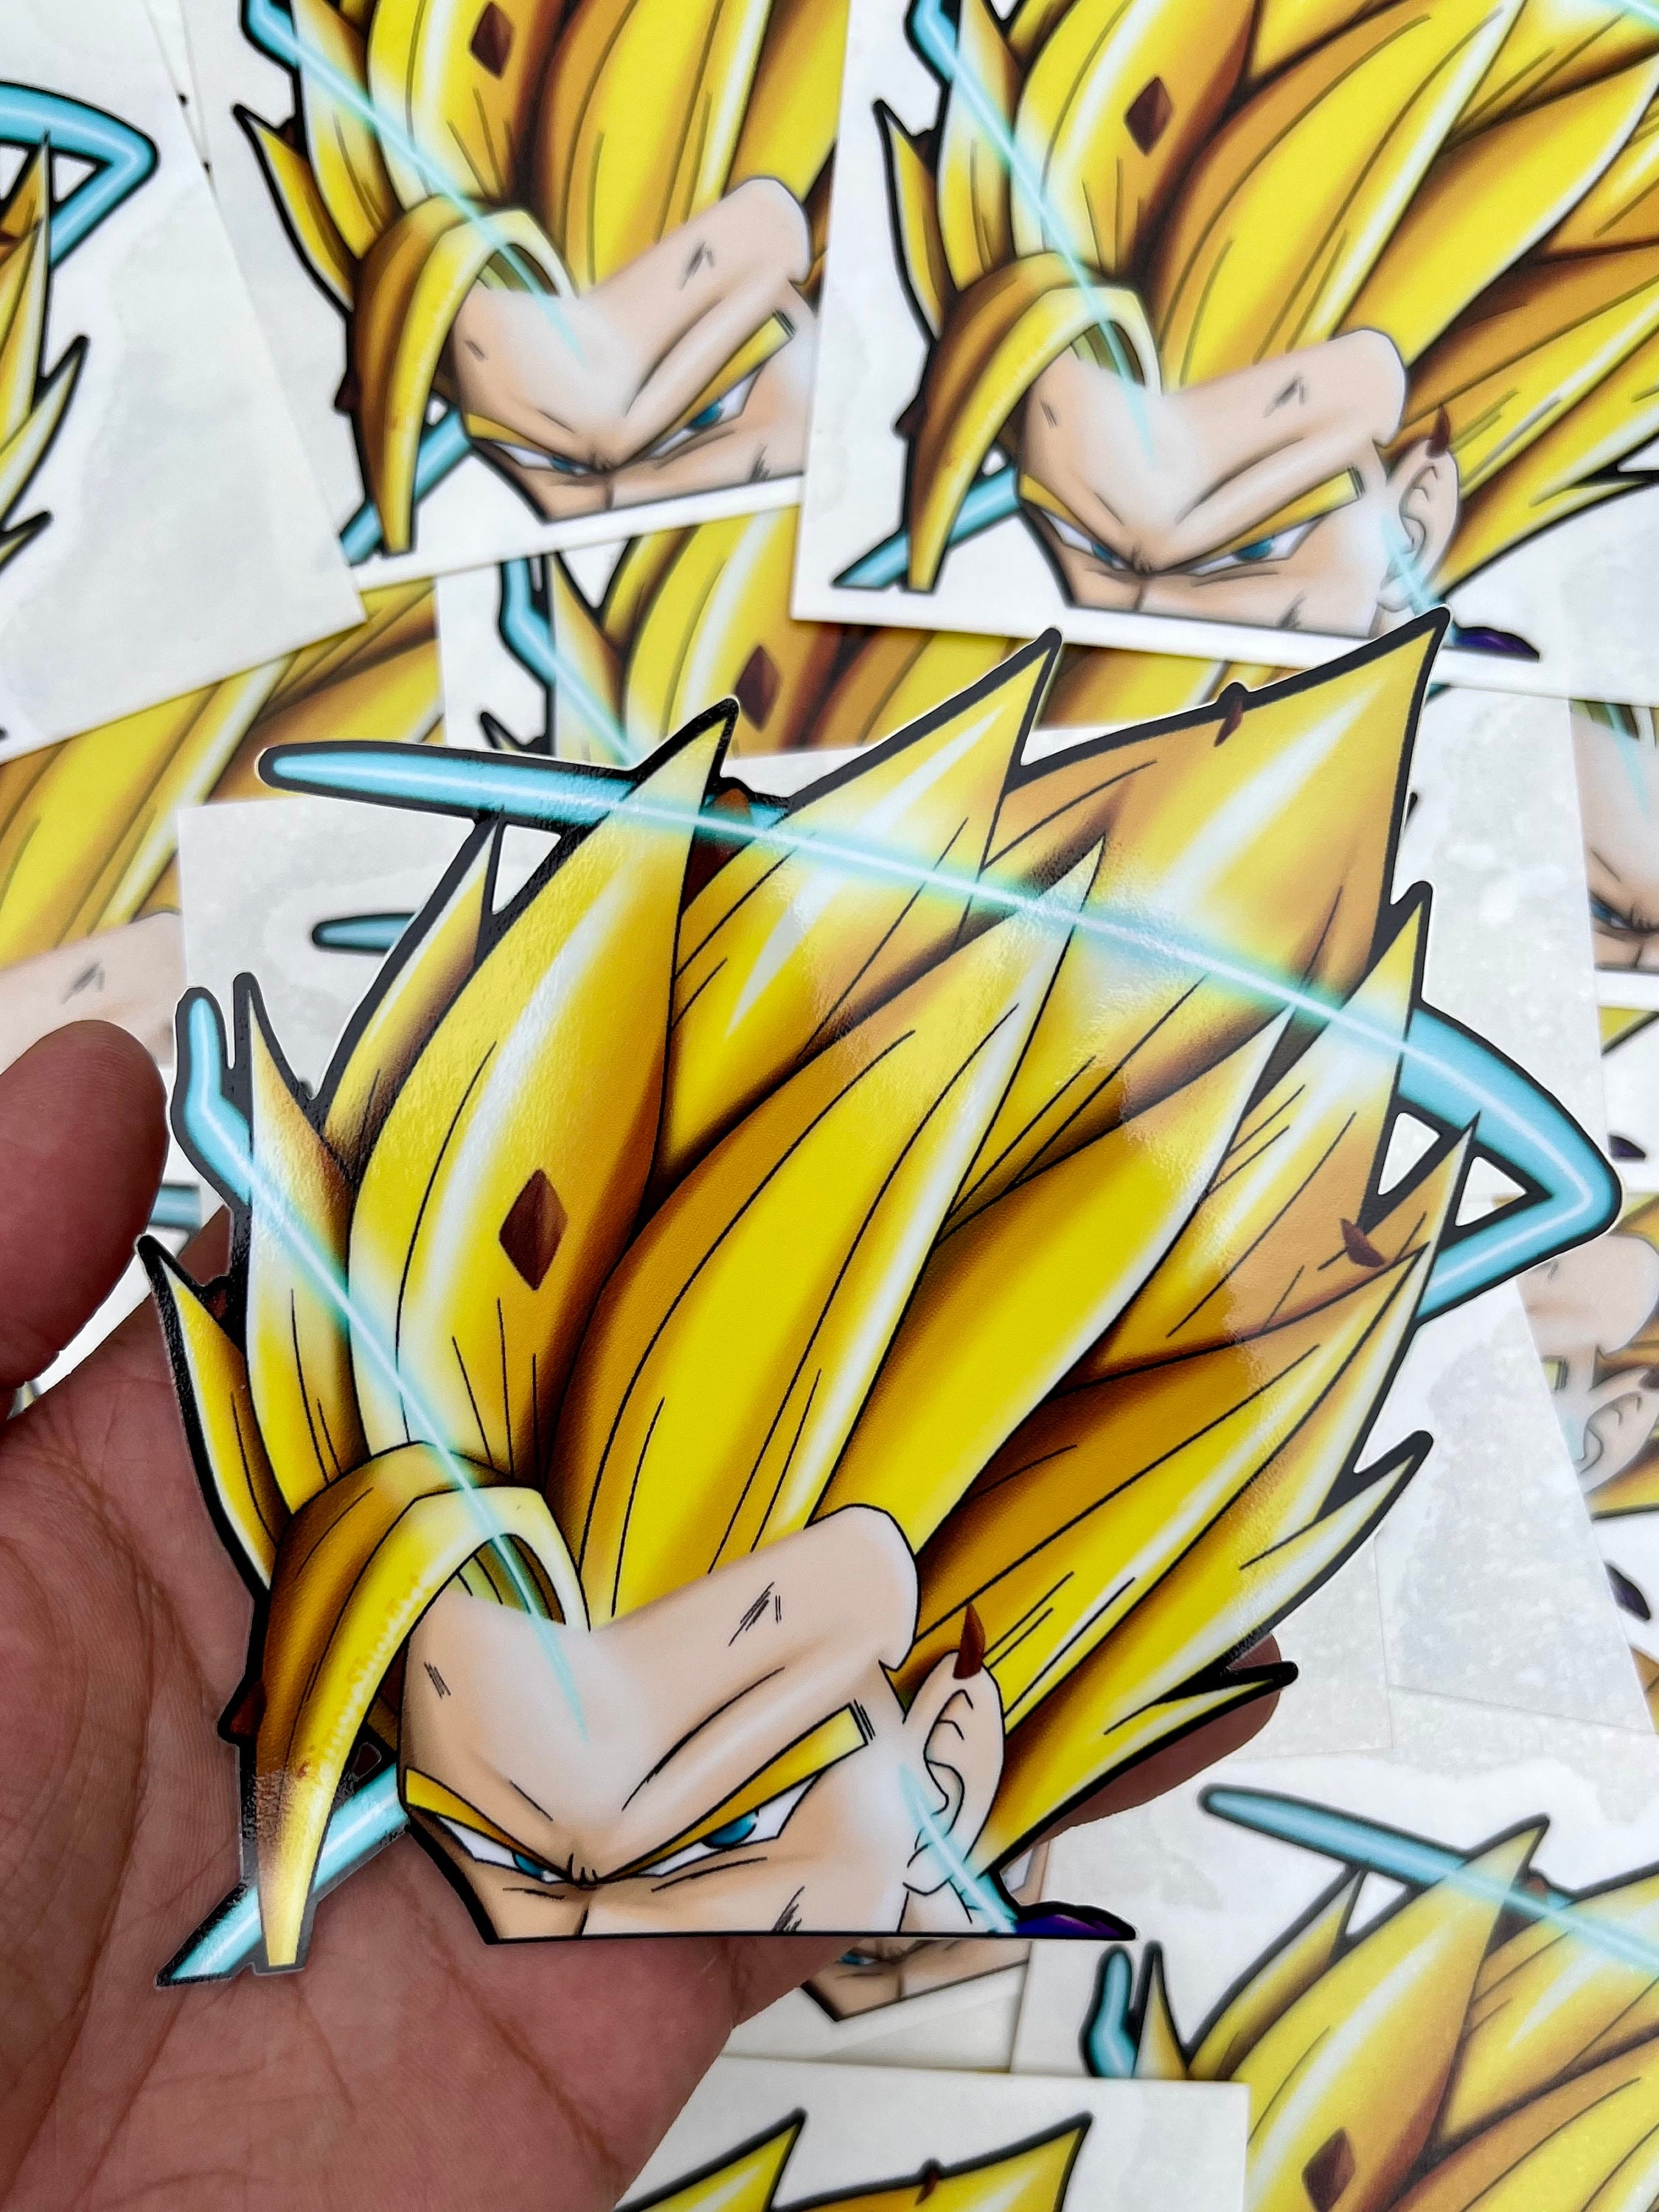 Goku Super Saiyan Blue Kaioken Style Digital Graphic · Creative